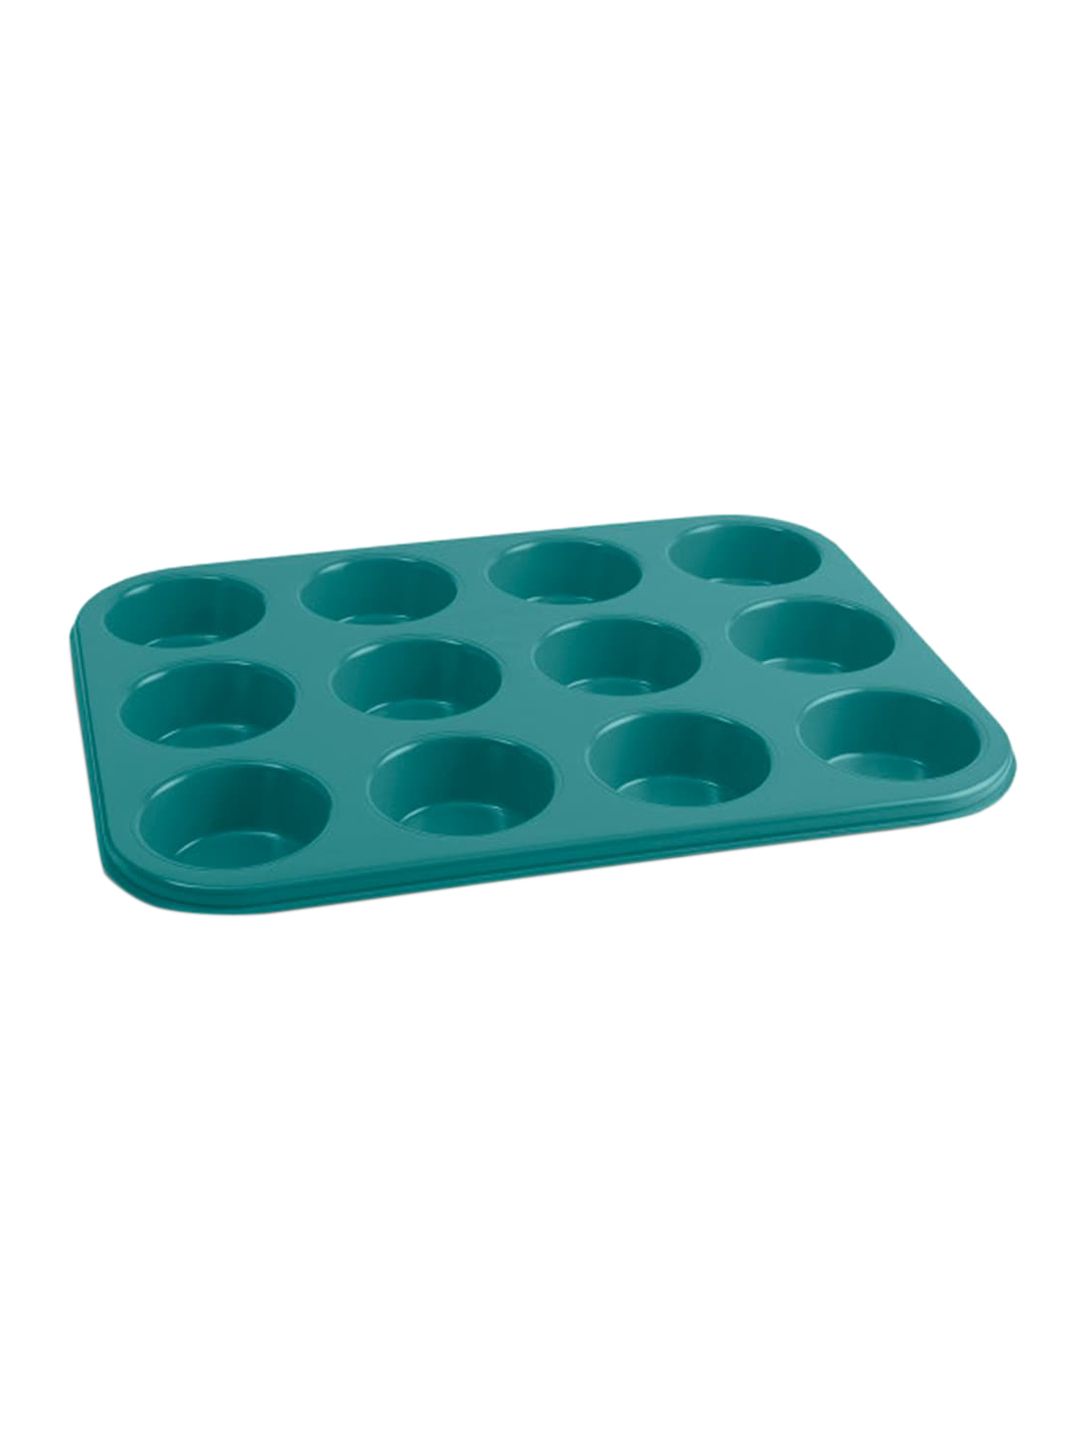 Jamie Oliver Sea Green Solid Non-Stick 12 Hole Muffin Tin Price in India